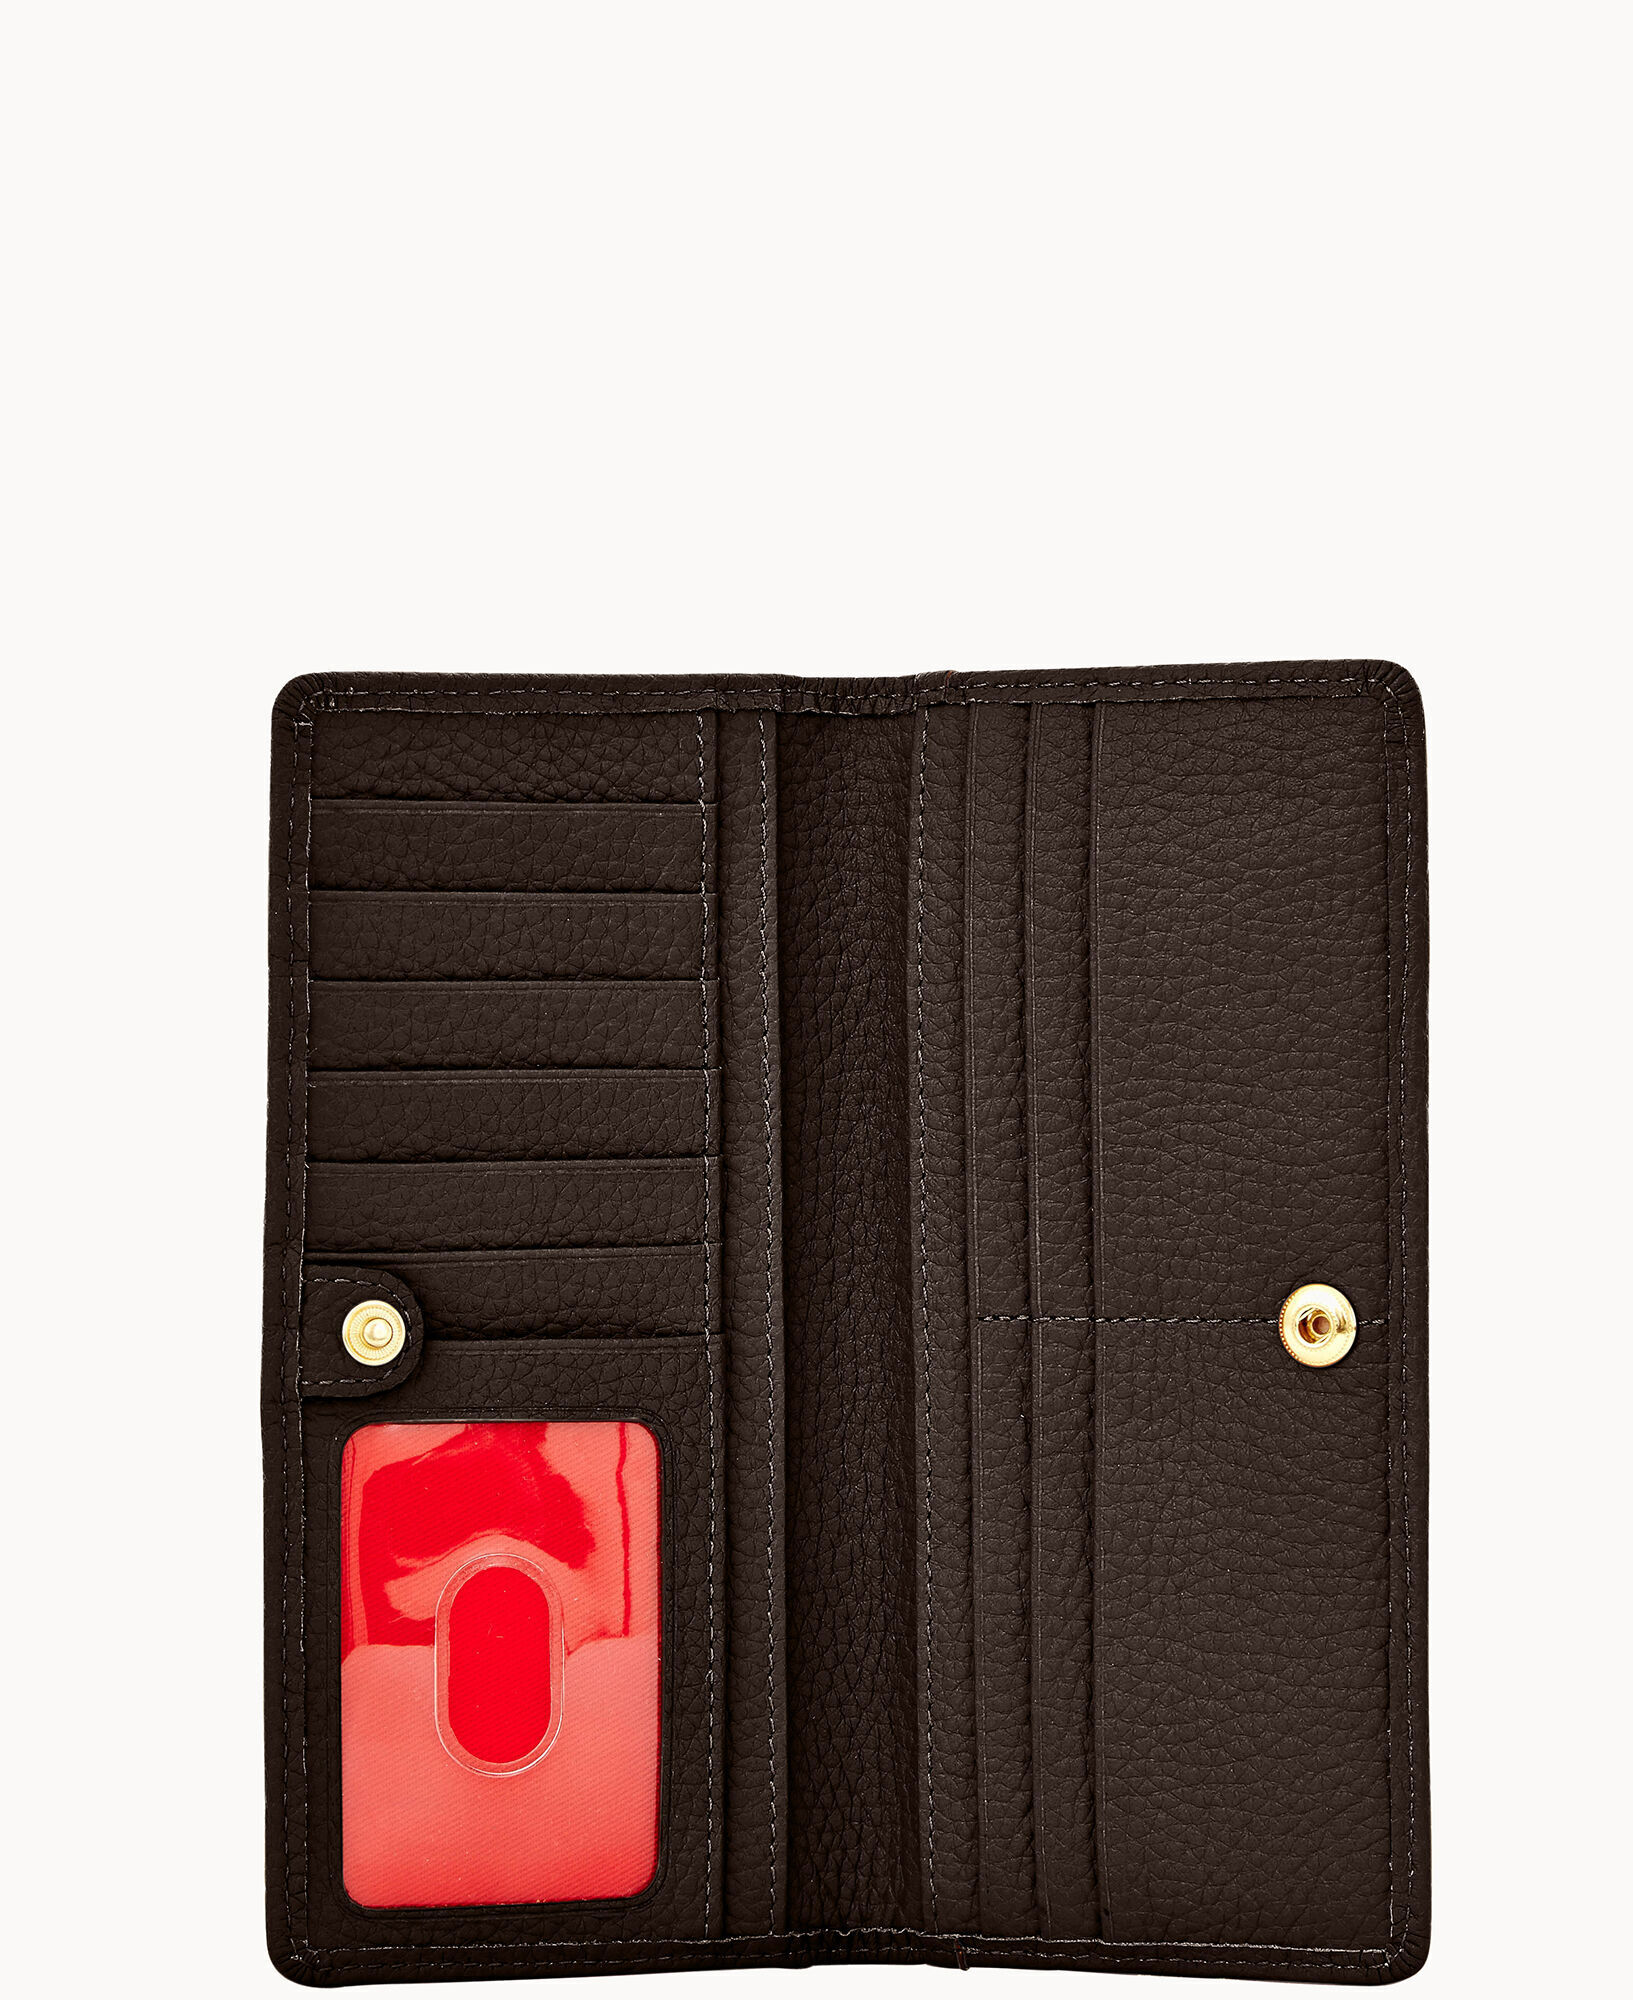 Dooney & Bourke Pebble Leather Slim Wallet - Black/Gold